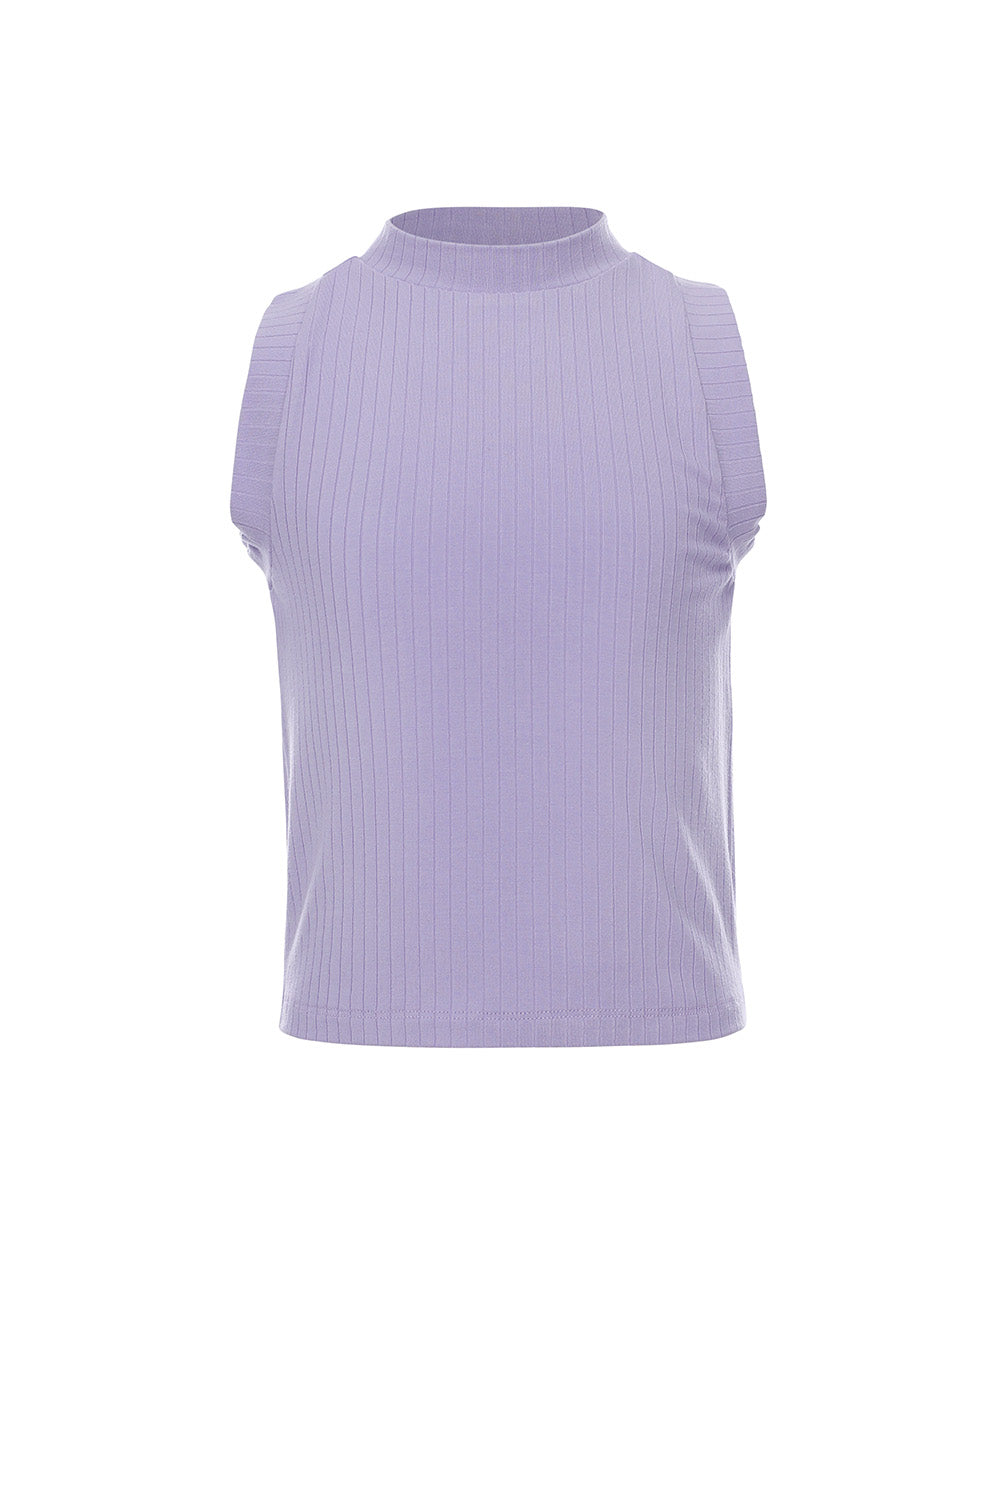 Meisjes Sleeveles T-Shirt van LOOXS 10sixteen in de kleur Pale purple in maat 176.